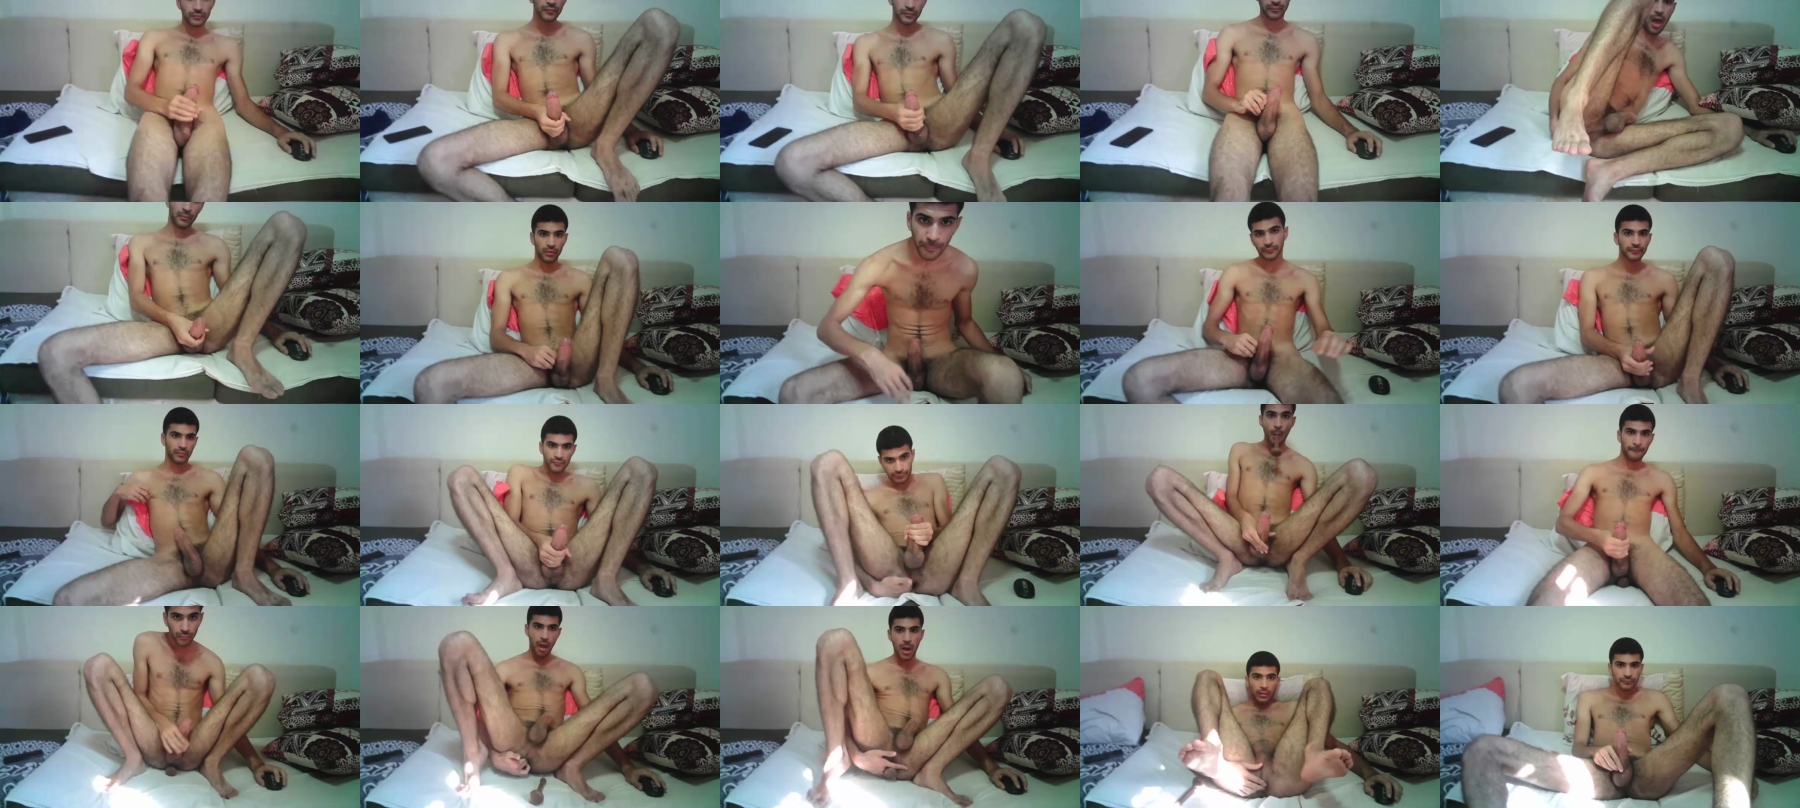 Jackieshaw996  01-08-2021 Male Webcam